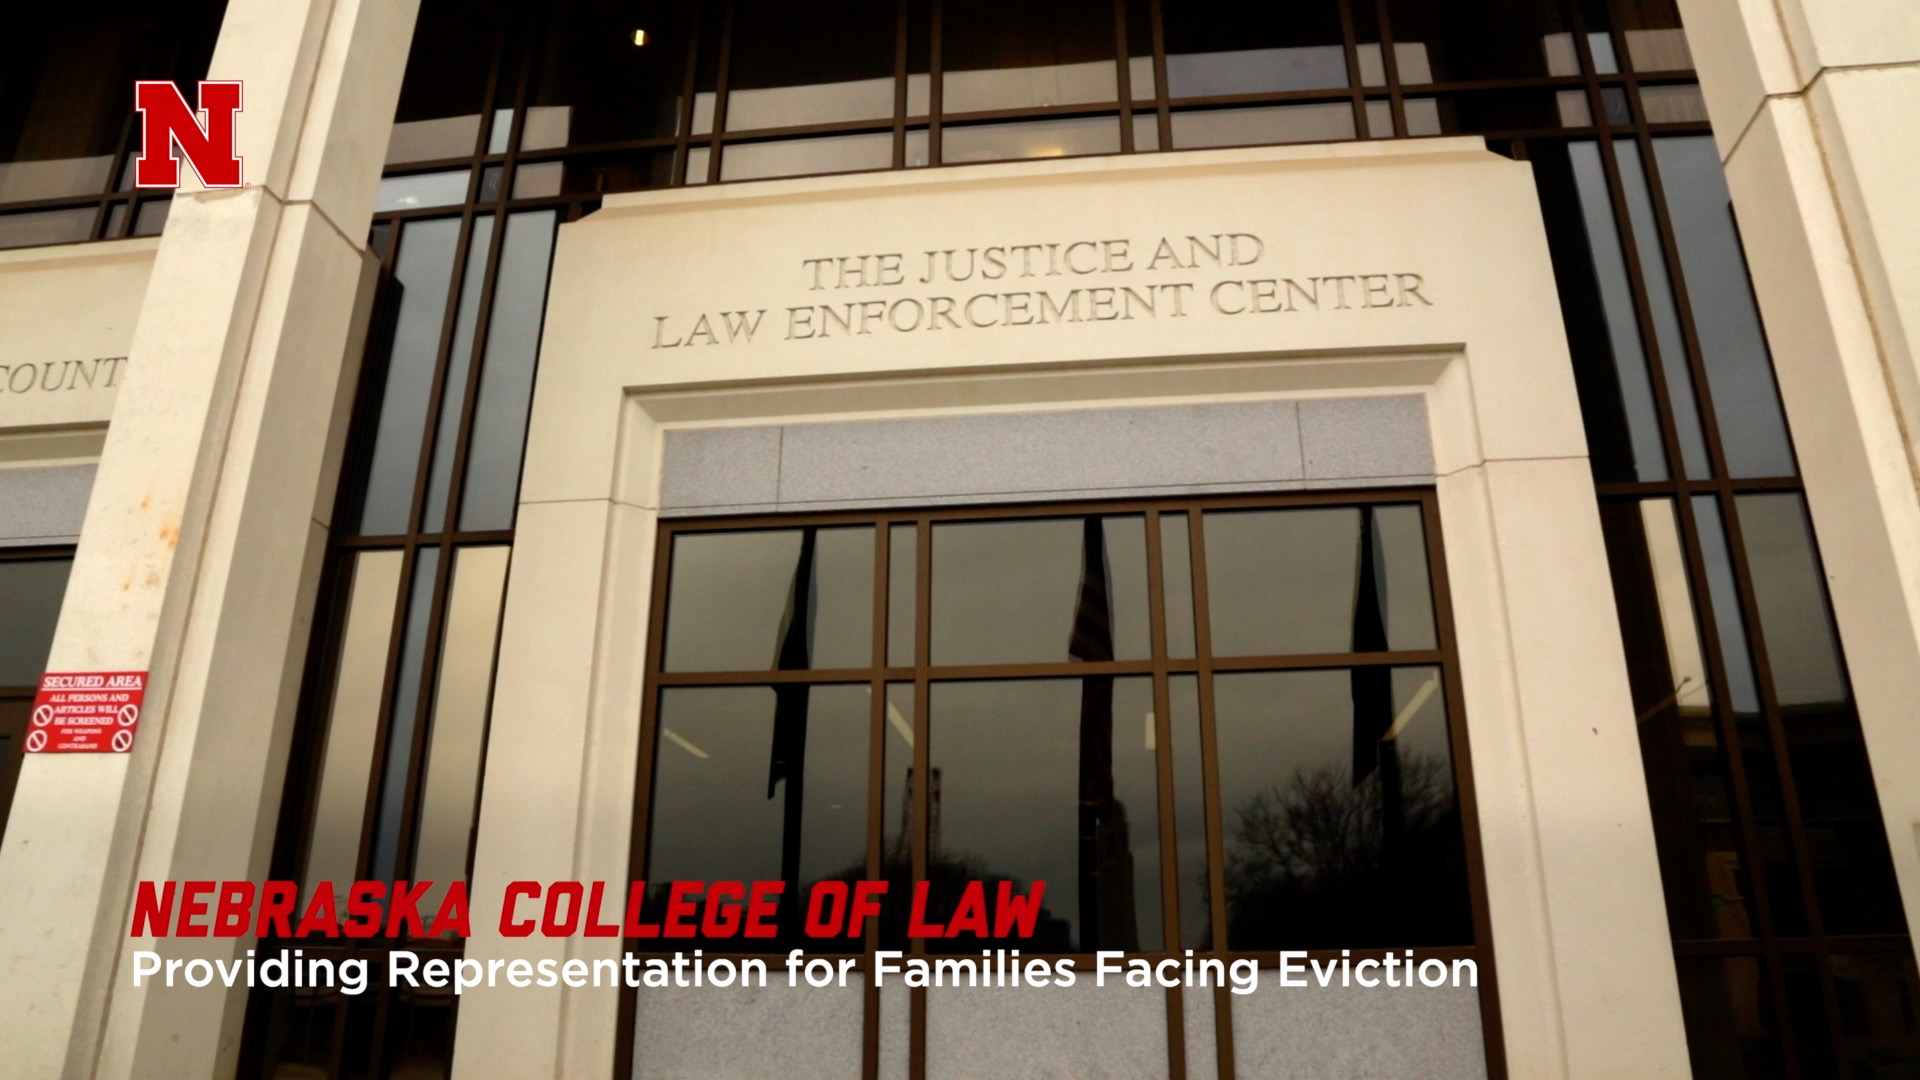 Nebraska College of Law: Providing Representation for Families Facing Eviction